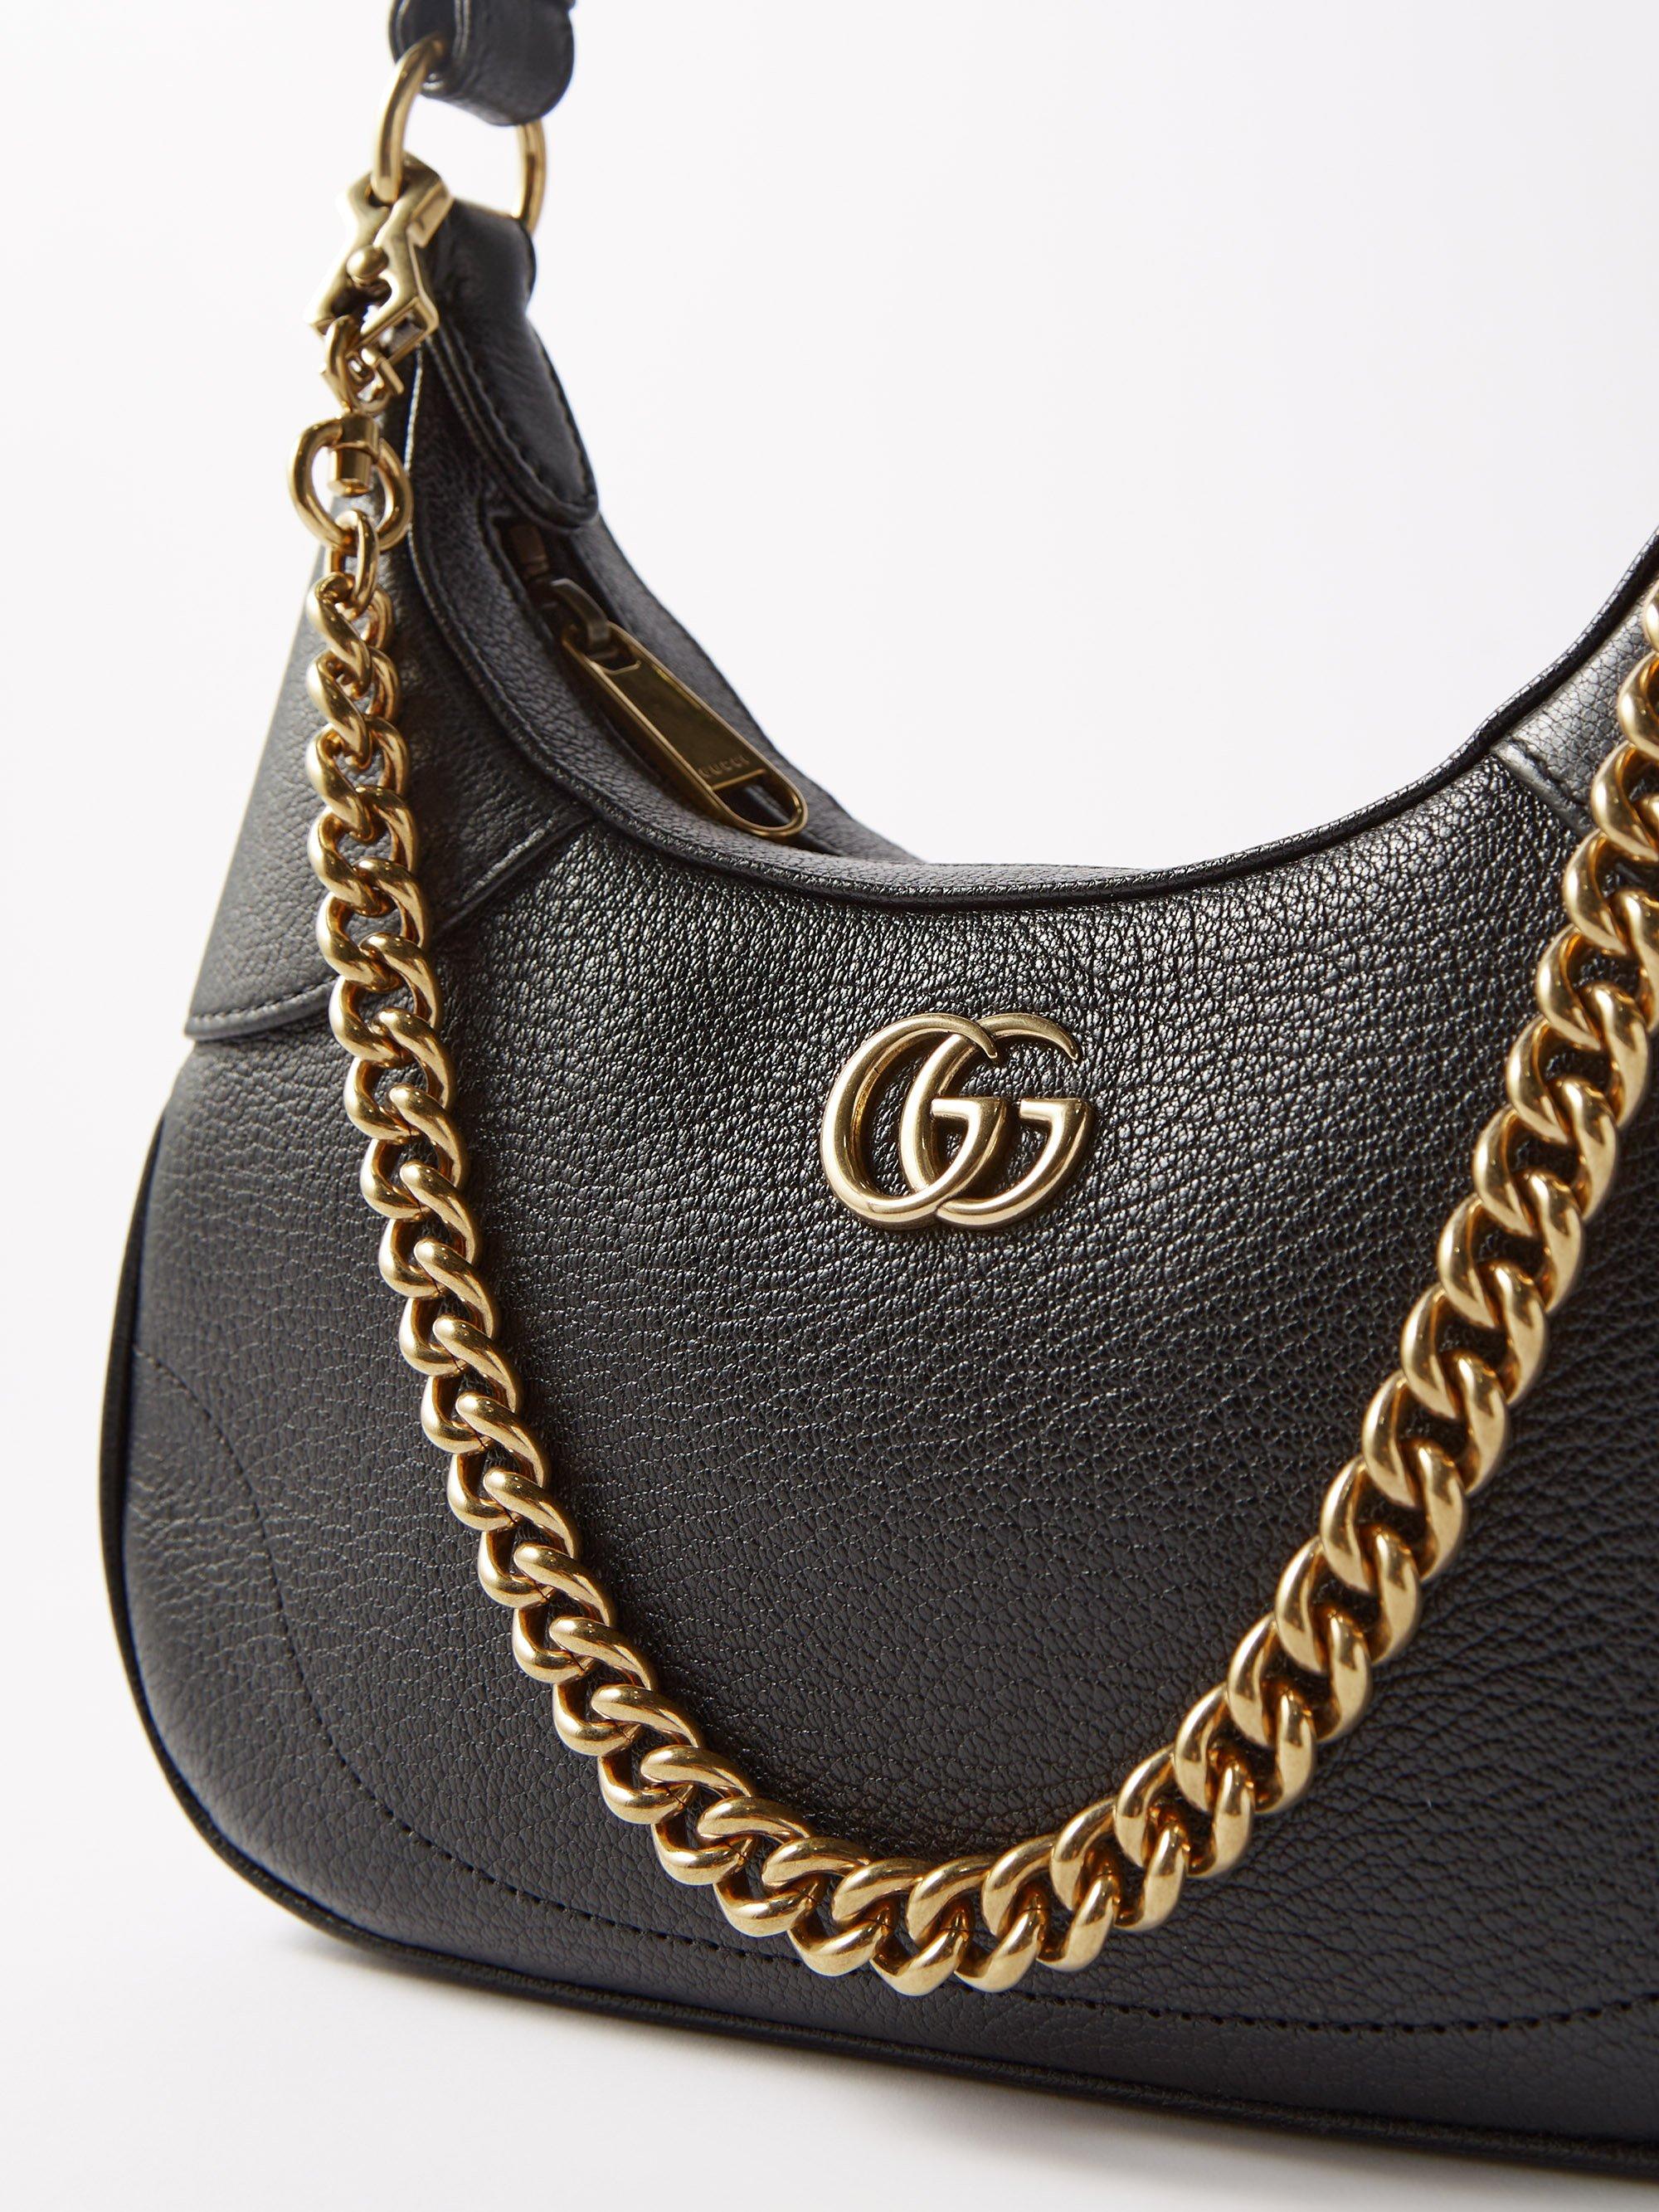 Aphrodite Small Leather Shoulder Bag in Black - Gucci